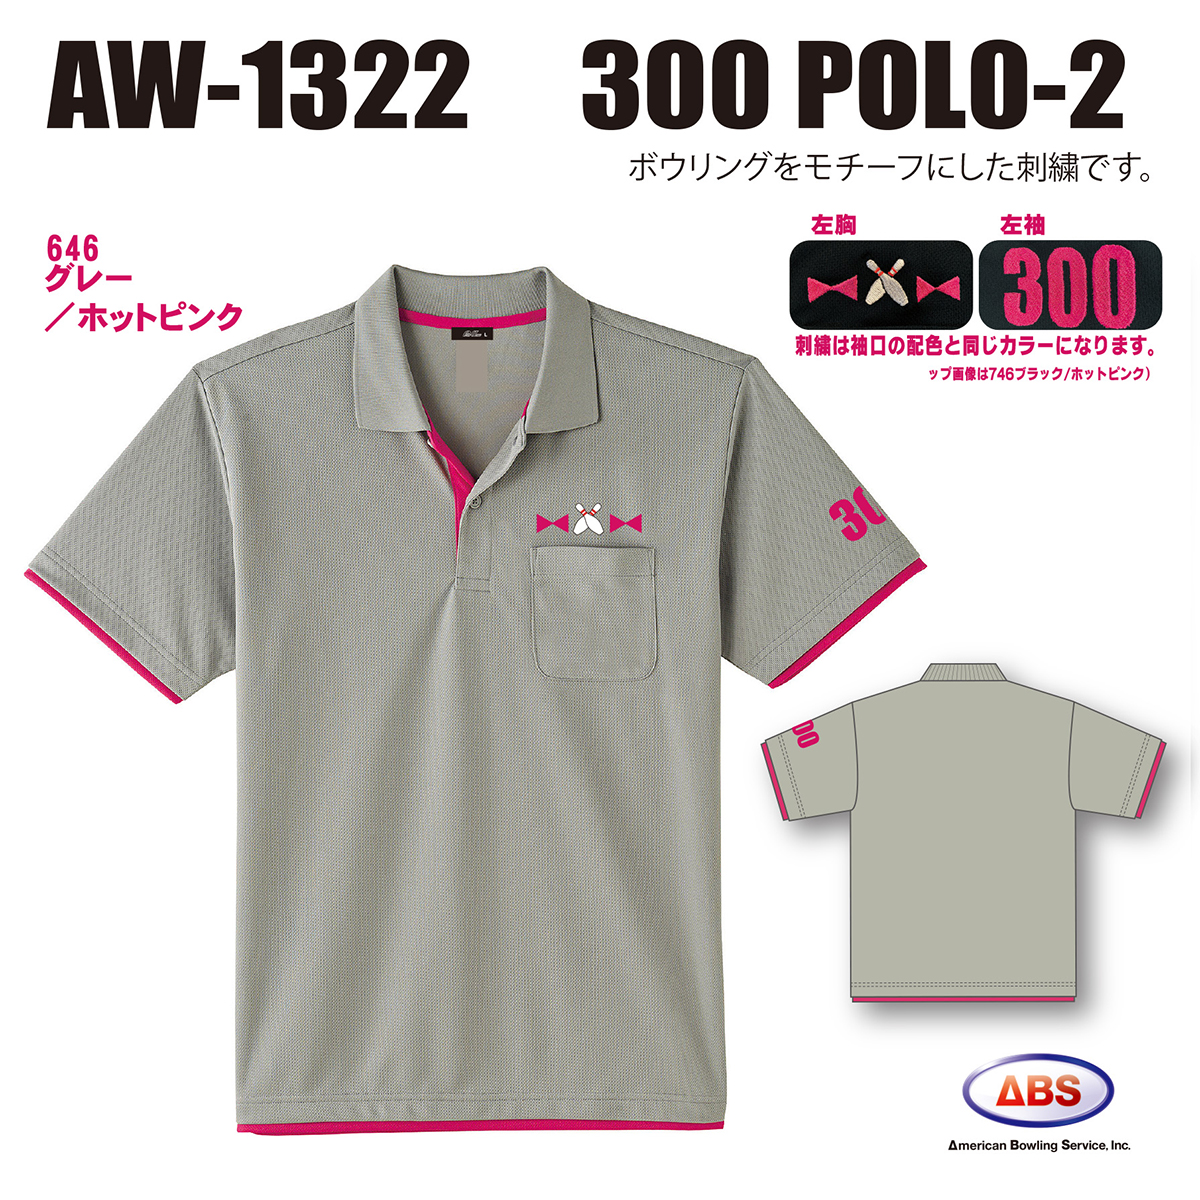 AW-1322 300POLO-2(受注生産) - ウインドウを閉じる